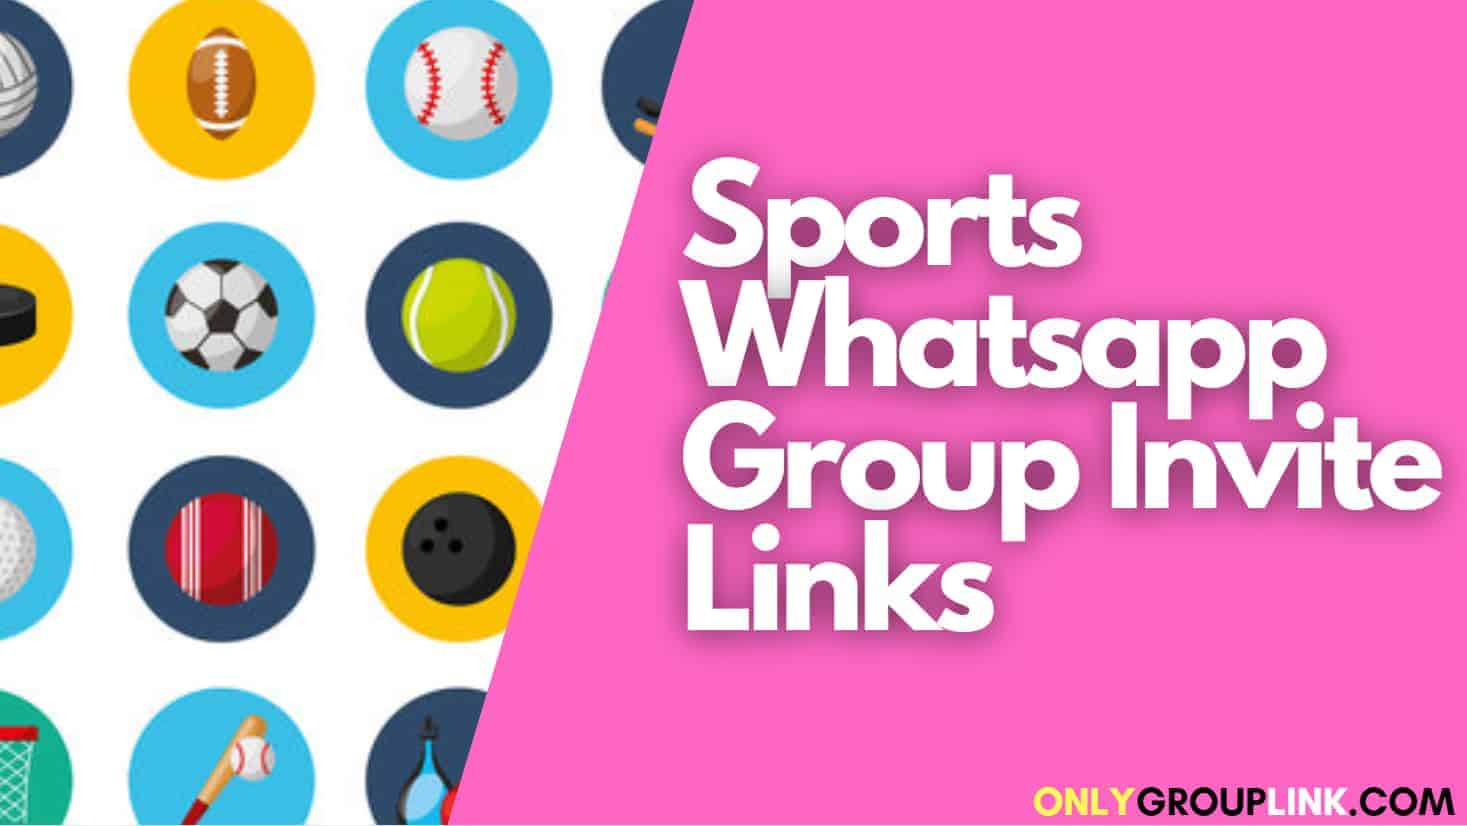 Sports Whatsapp Group Links